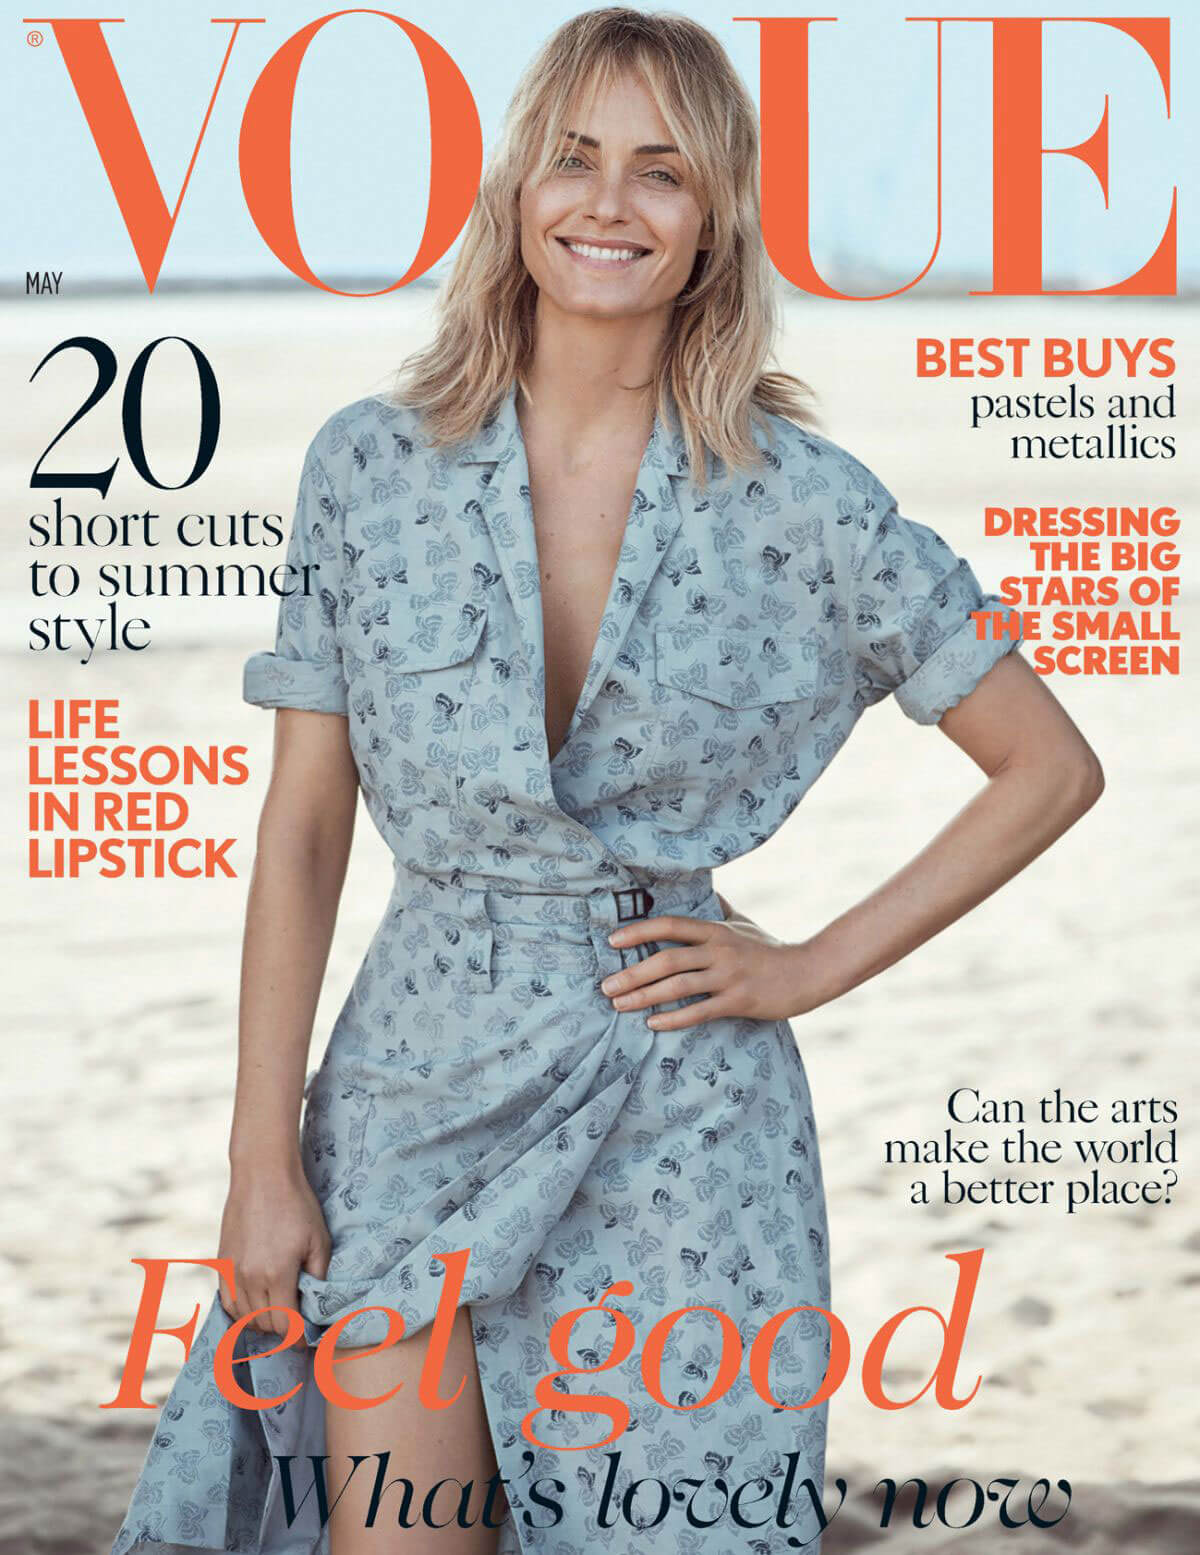 Amber Valletta Photoshoot in Vogue Magazine, May 2017